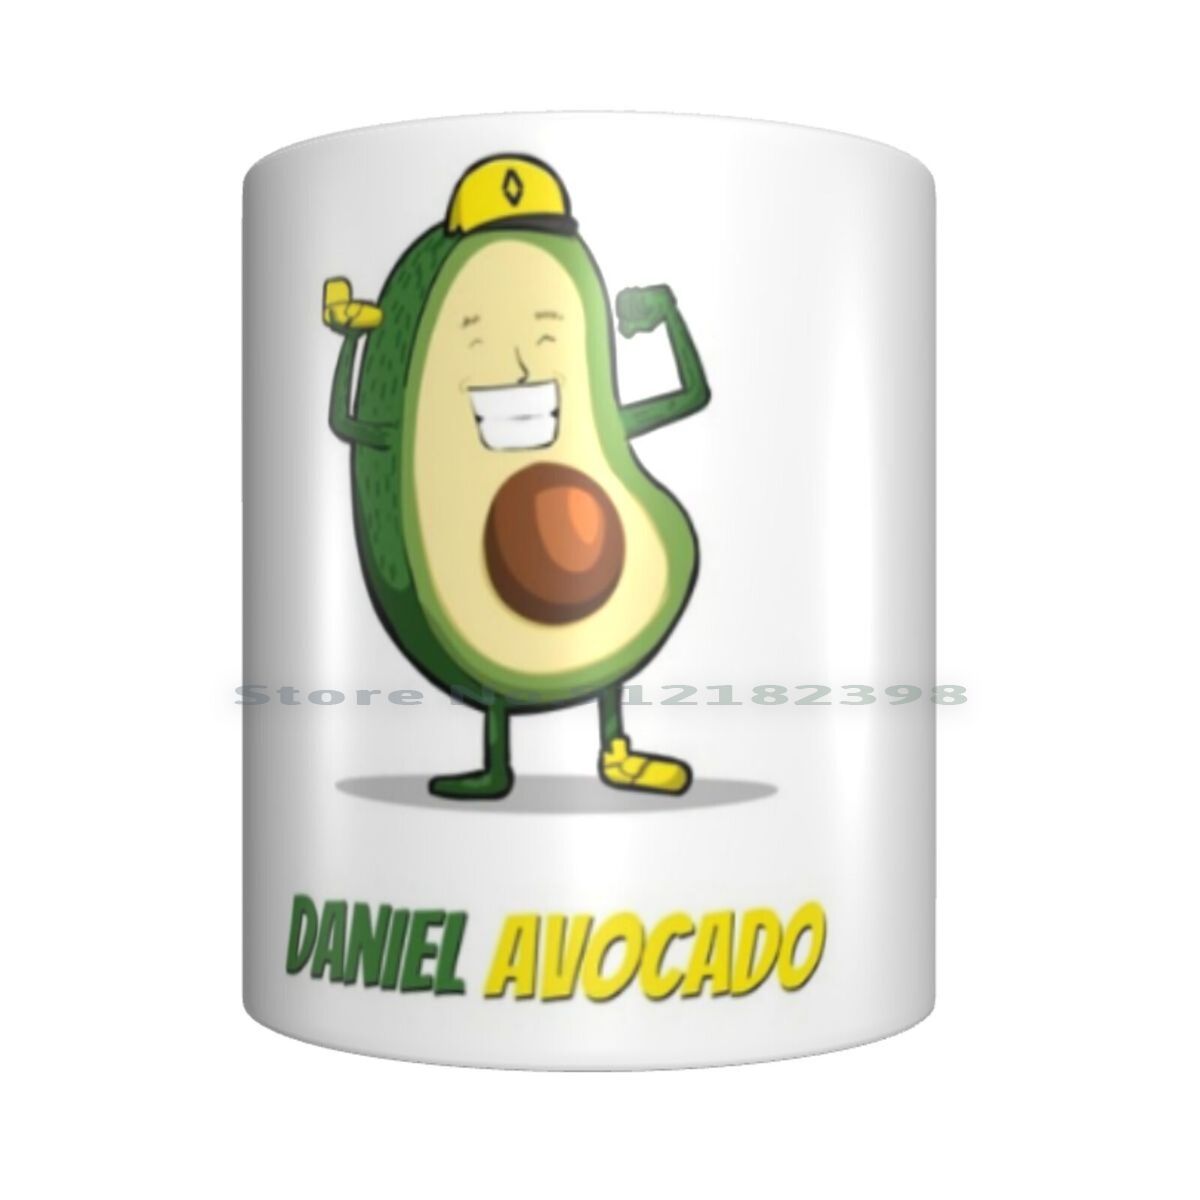 F1 Star Daniel "Avocado" Ricciardo 3 Great Moment With Fan Inspired Mugs Perfect Gift